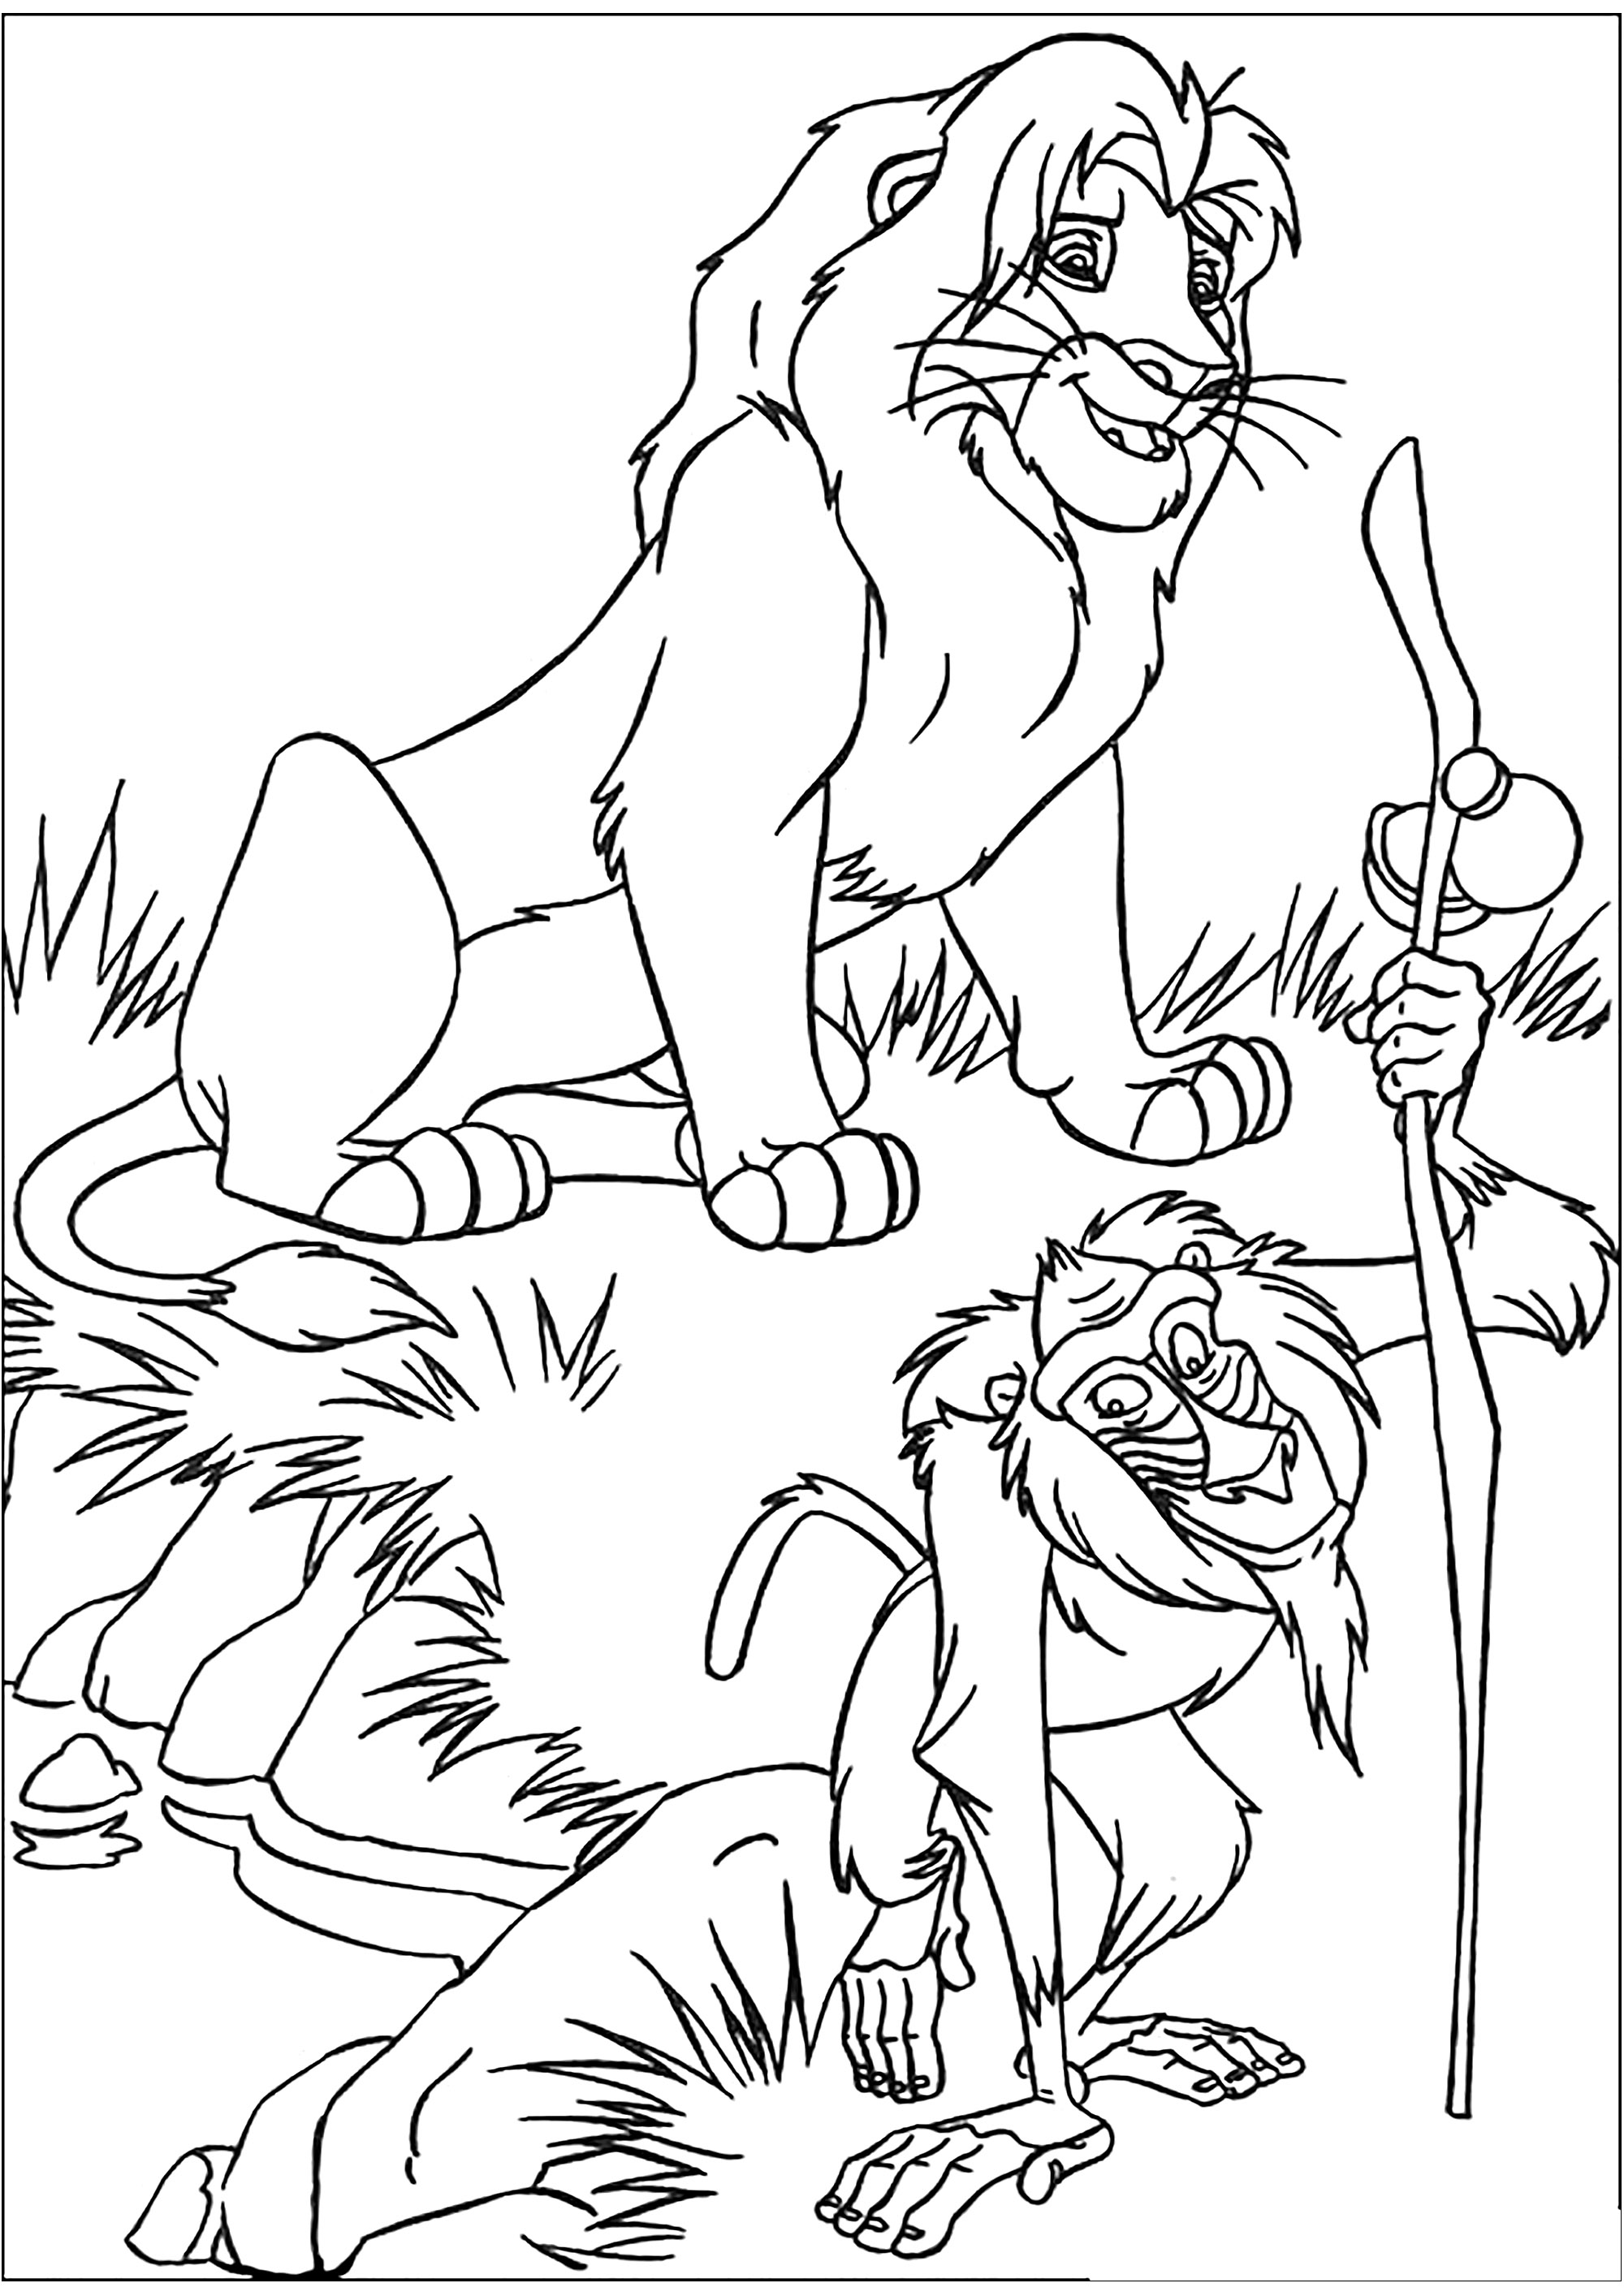 O Rei Leão : Simba et Rafiki